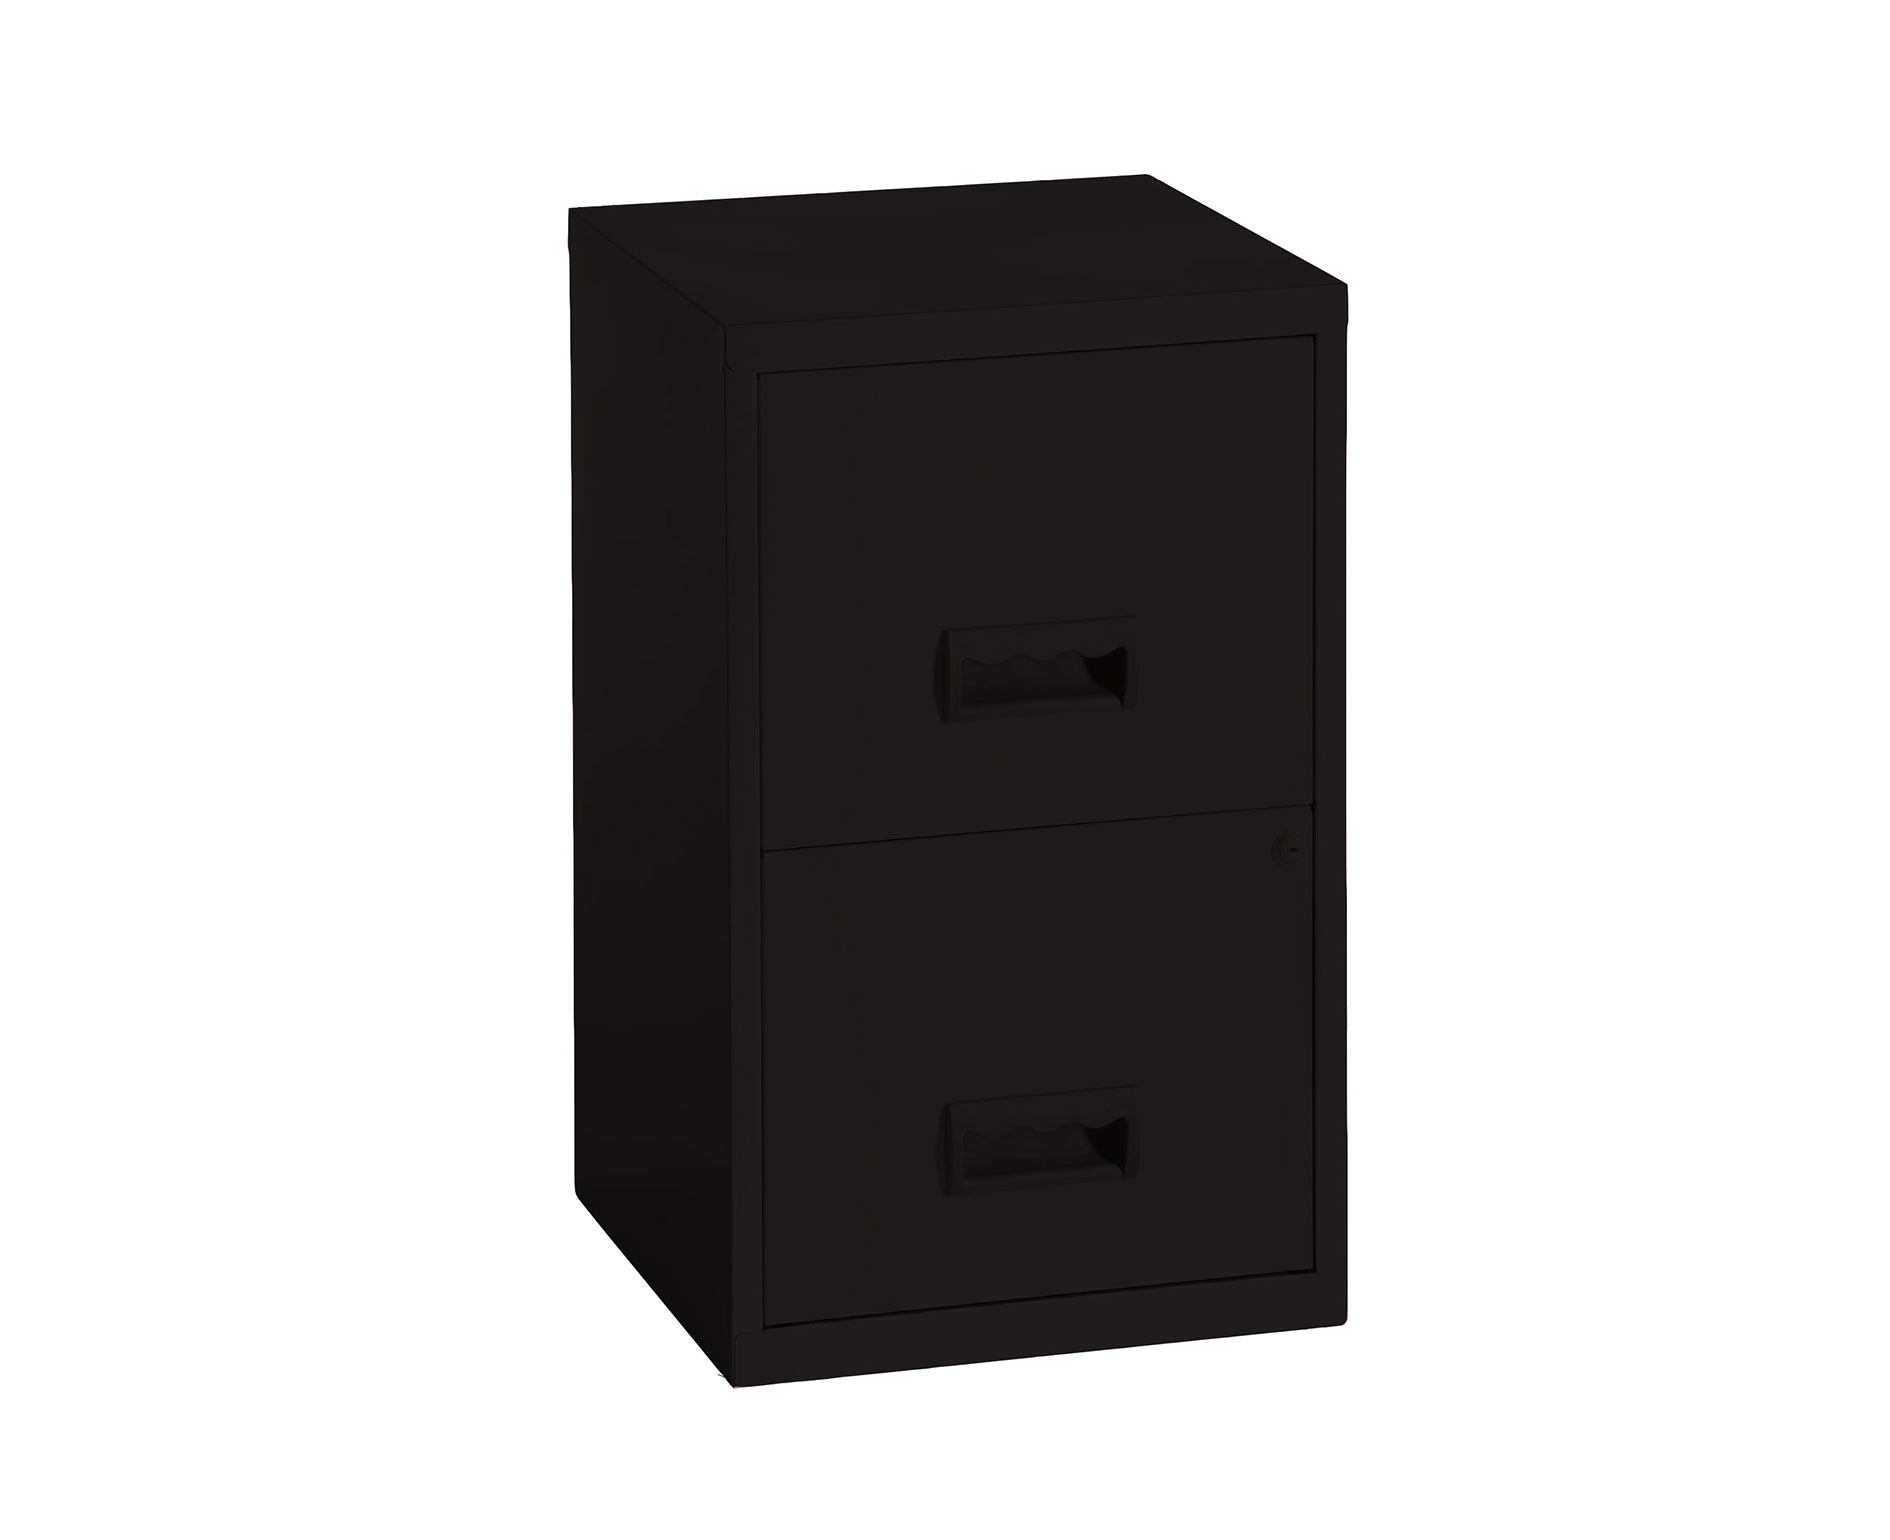 Black Filing Cabinets Storage Shelving Furniture Storage Ryman with regard to size 1890 X 1540